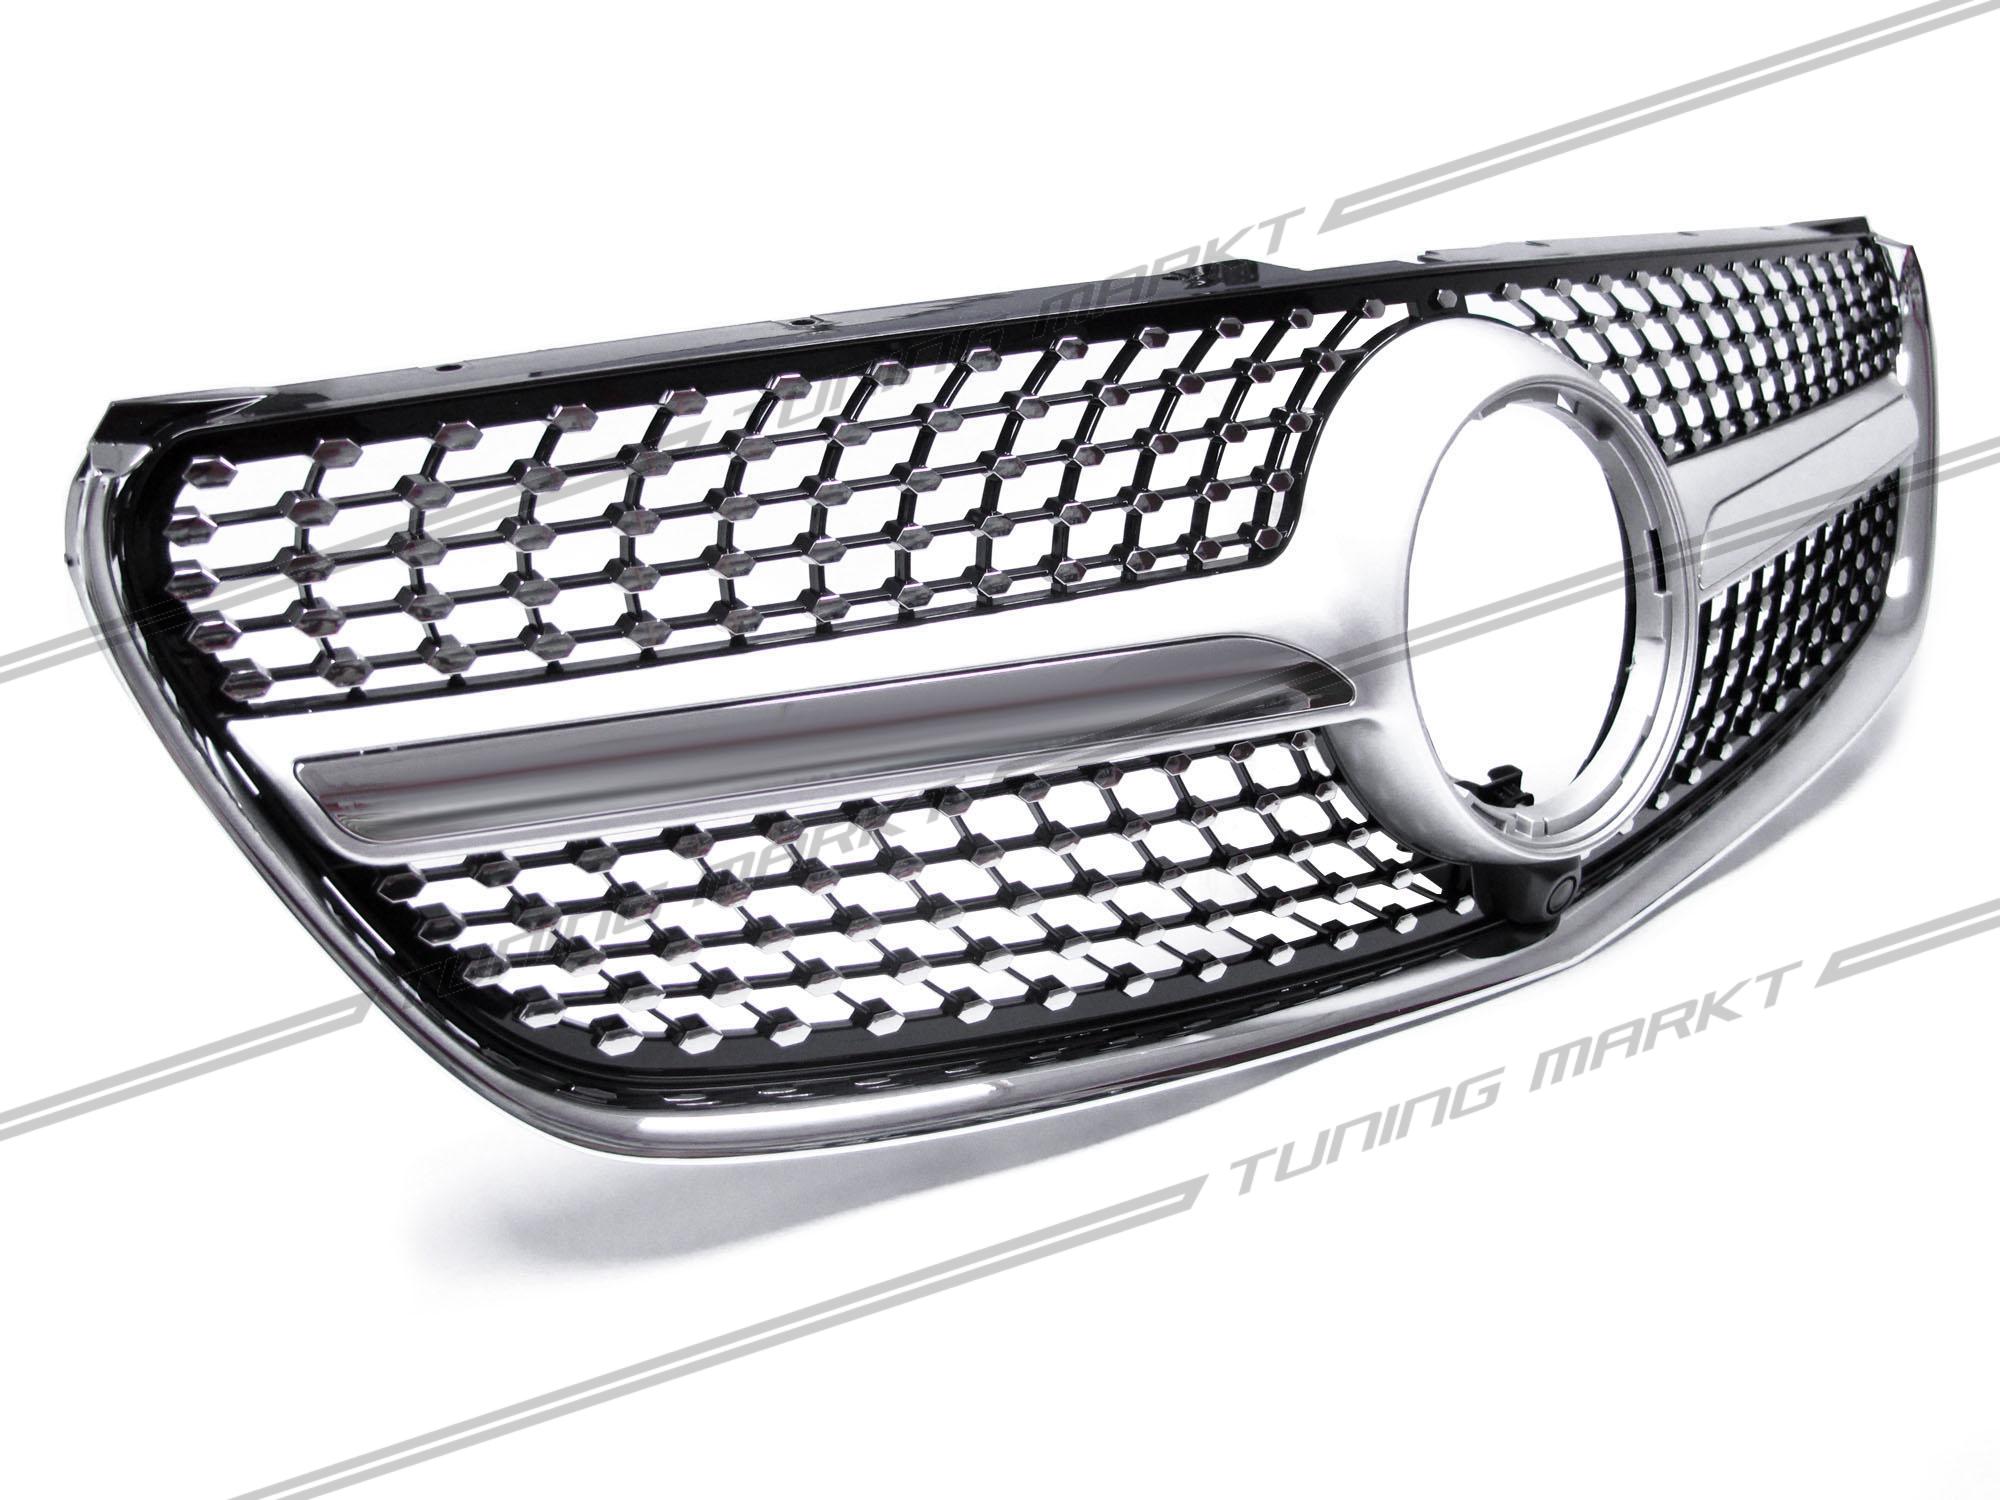 Kühlergrill für Mercedes Benz V-Klasse W447 2014-2019 Silber